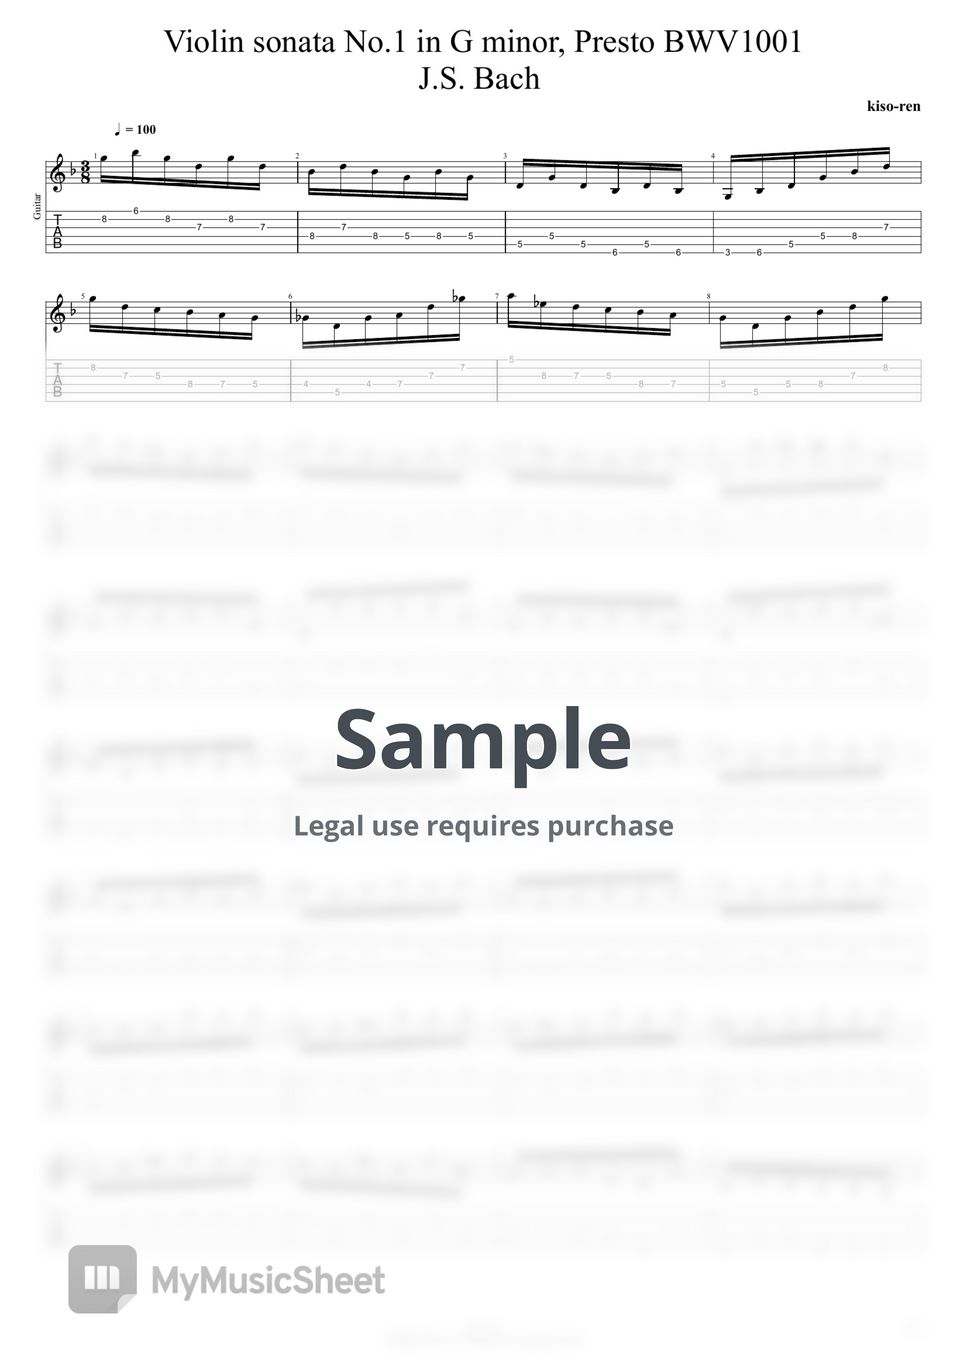 J.S. Bach - Violin sonata No.1 in G minor, Presto - J.S. Bach BWV 1001 (extract) (TAB PDF & Guitar Pro files.（gp5）) by Technical Guitar